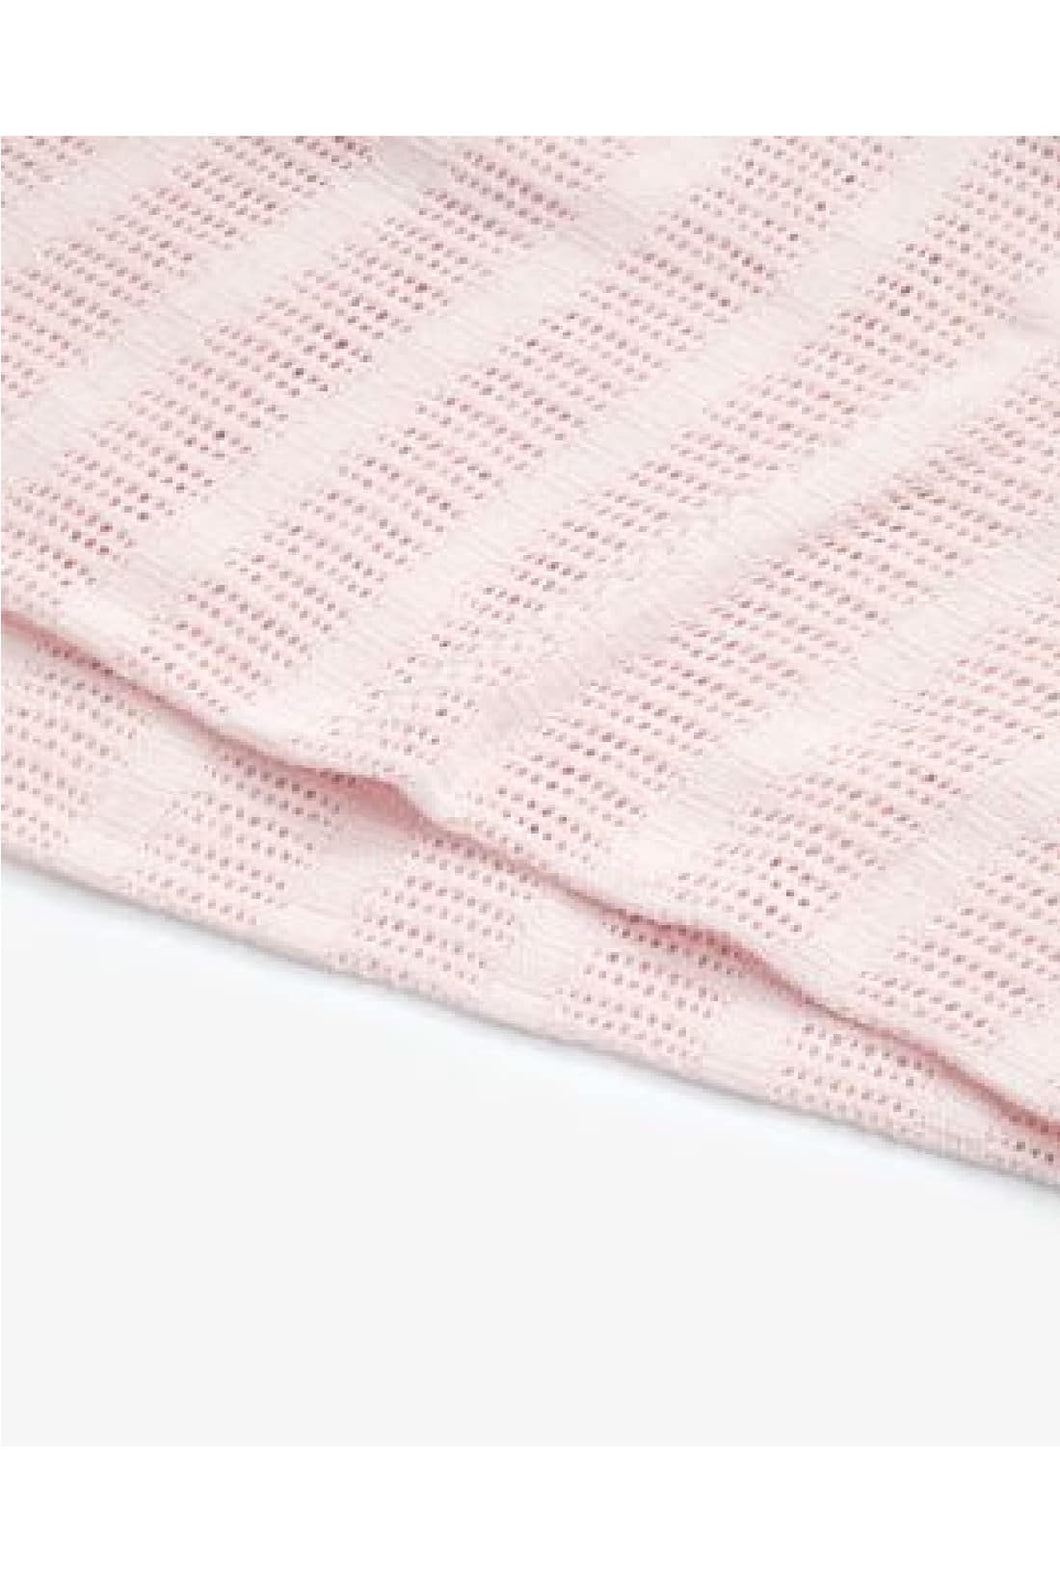 Mothercare Crib Moses Basket And Pram Cellular Cotton Blanket Pink 1